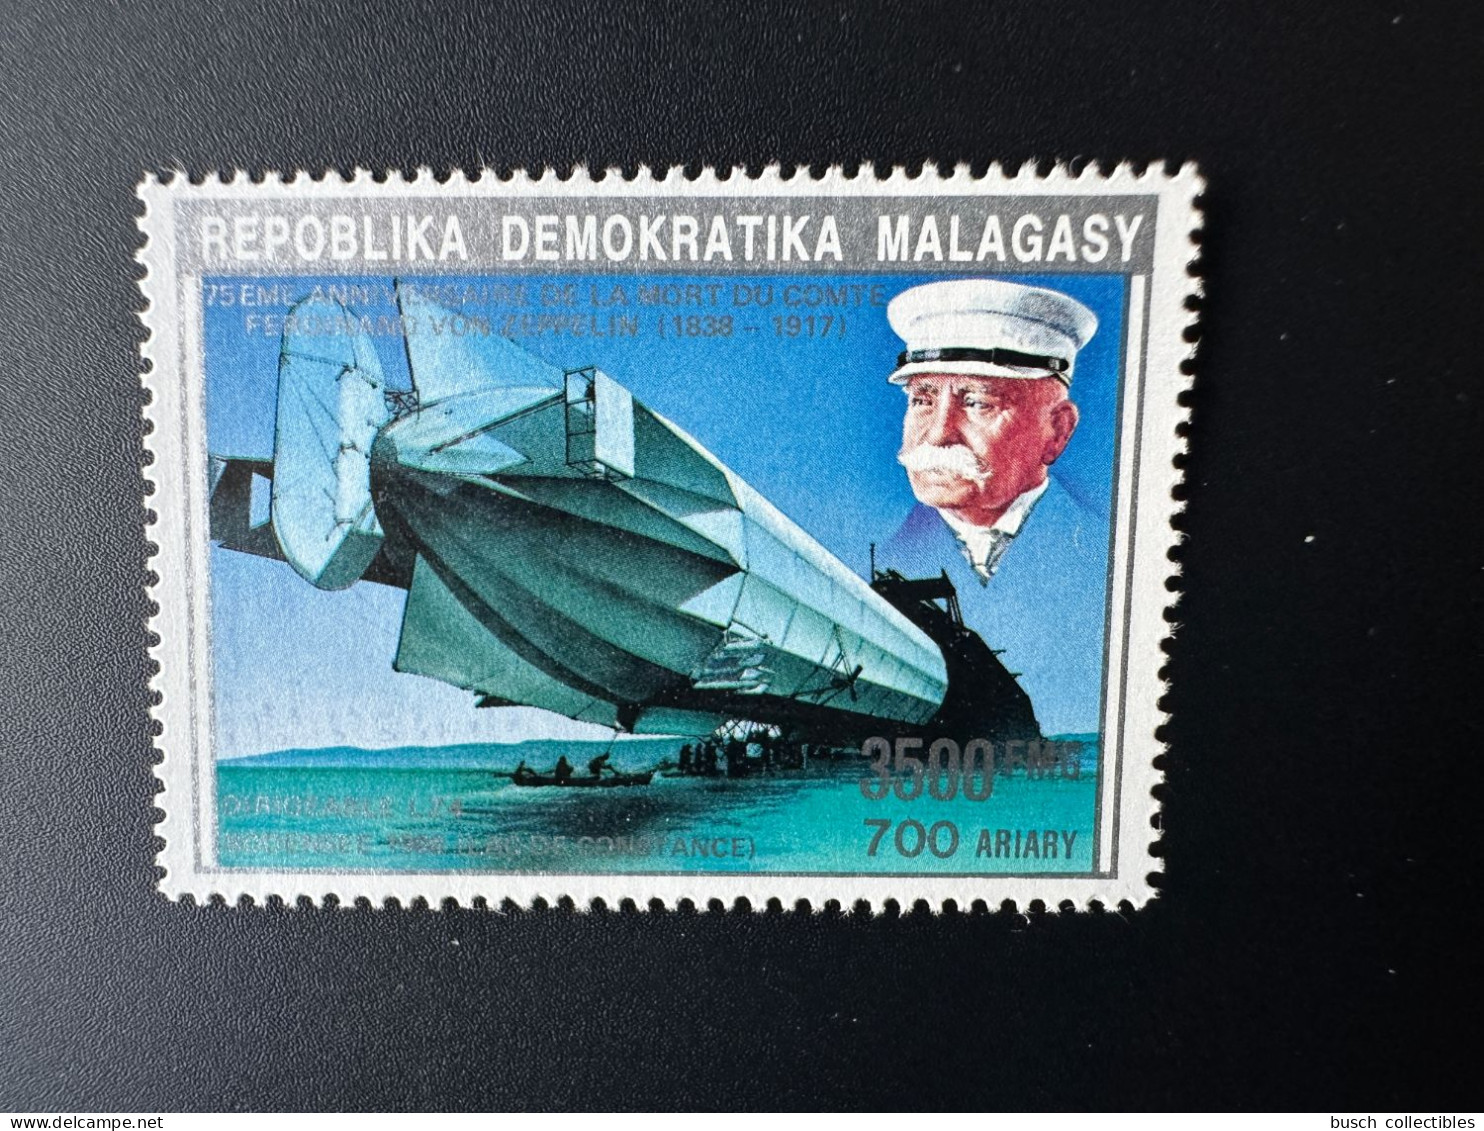 Madagascar Madagaskar 1992 Bl. Mi. 1396 I Ferdinand Conte Graf Von Zeppelin Ballon - Zeppeline